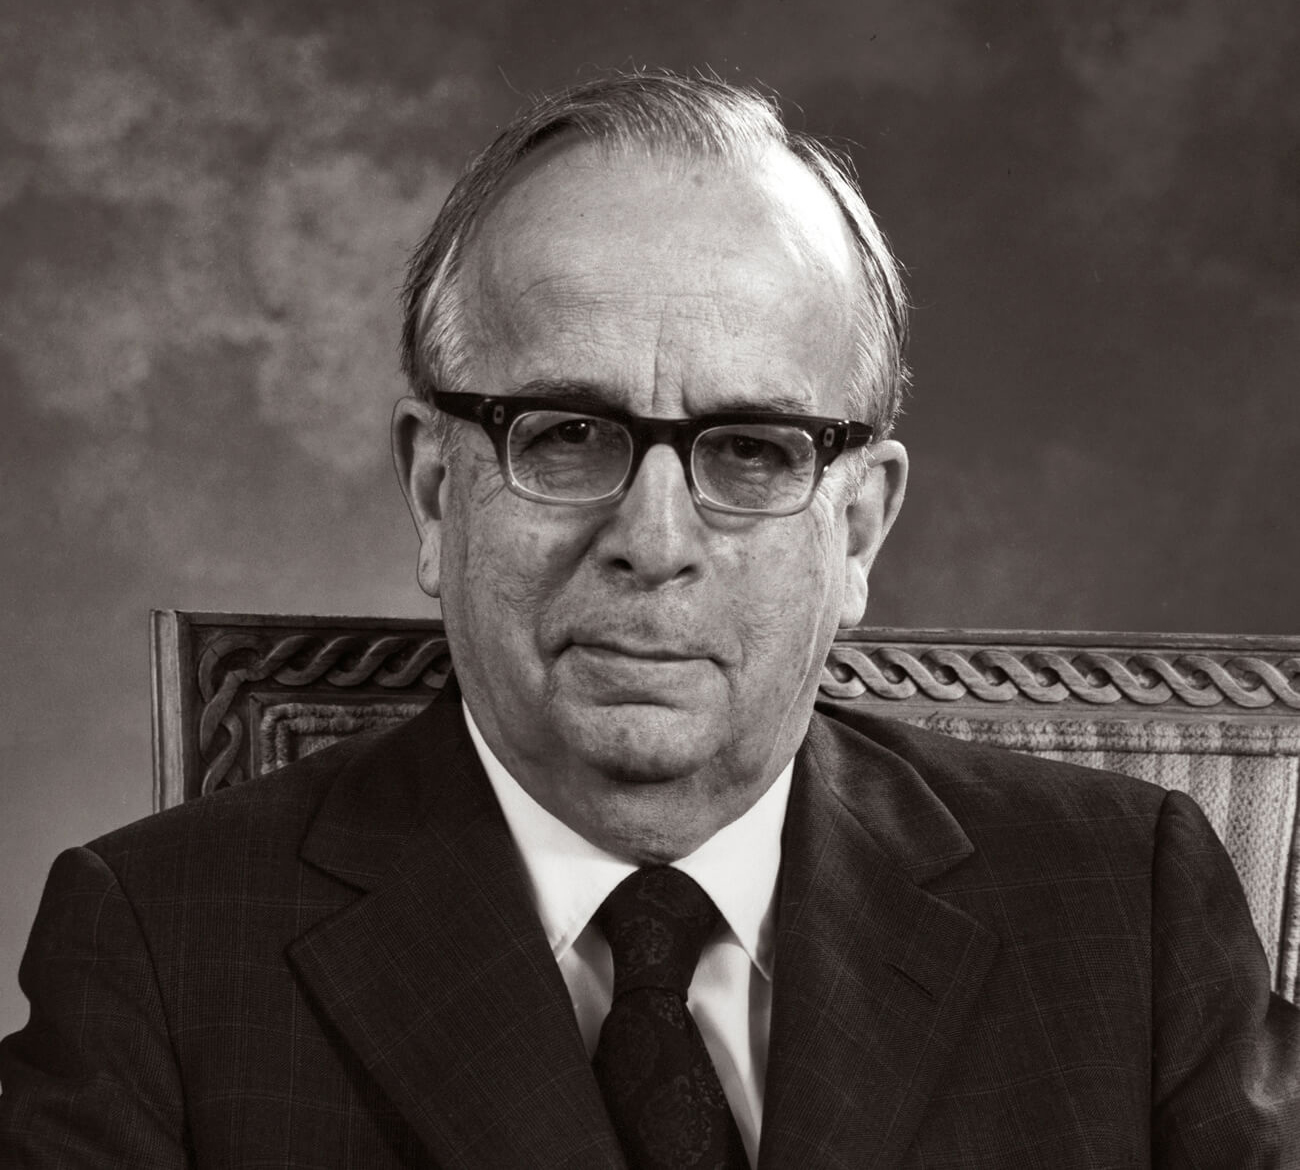 Eugenio Garza Sada